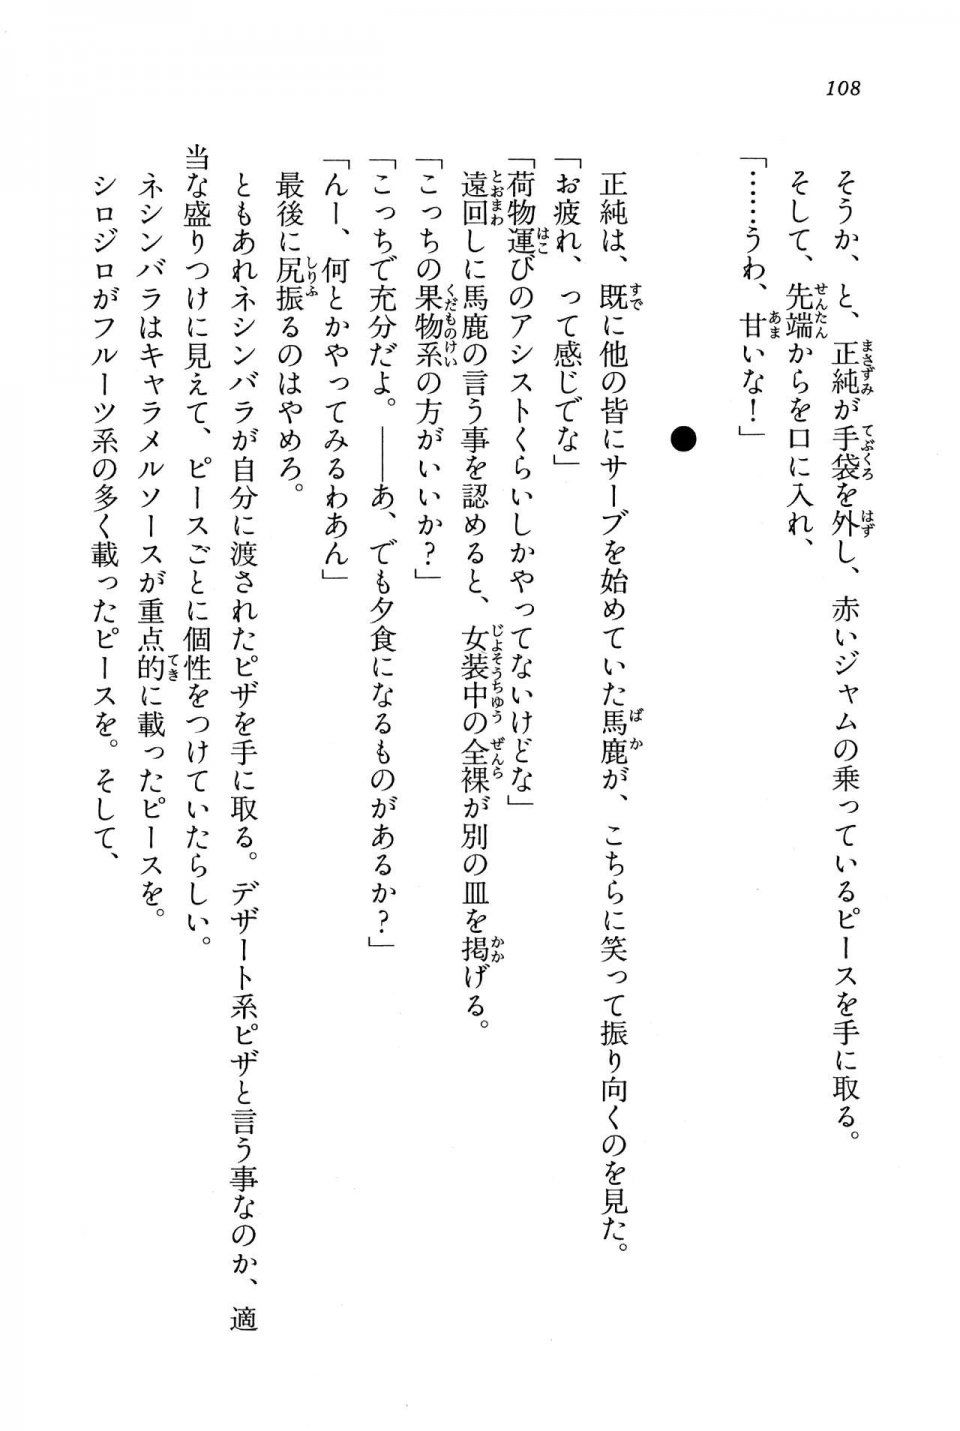 Kyoukai Senjou no Horizon BD Special Mininovel Vol 8(4B) - Photo #112